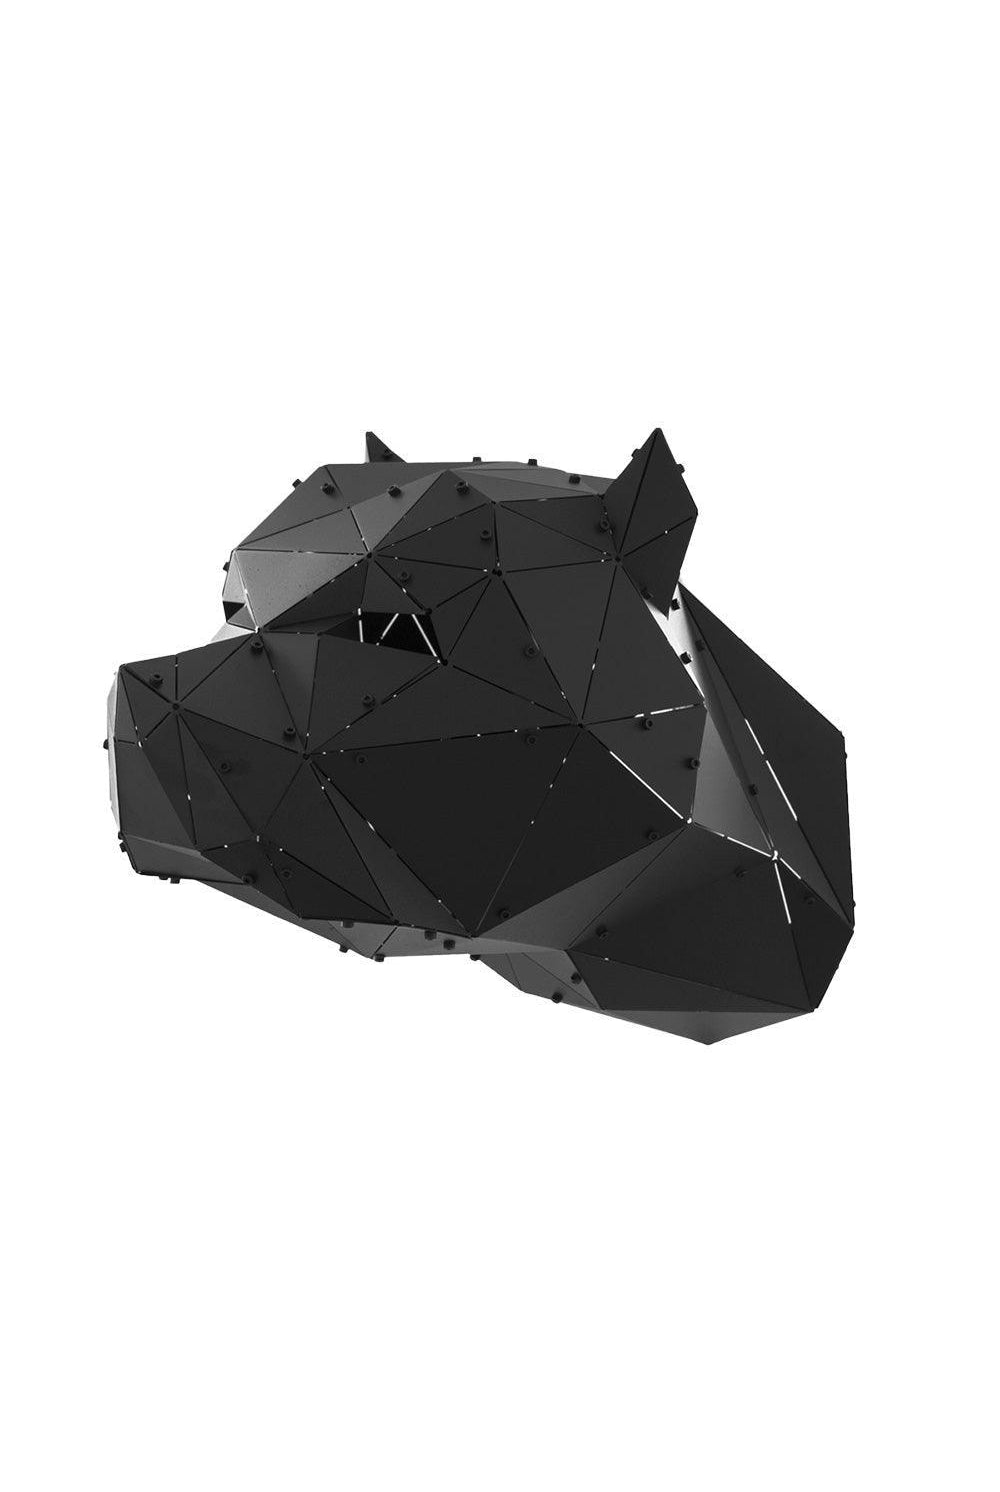 OTTOCKRAFT | Dekoratif Objeler | OTTOCKRAFT™ | PITBULL - 3D Geometrik Metal Köpek Figürü | Milagron 